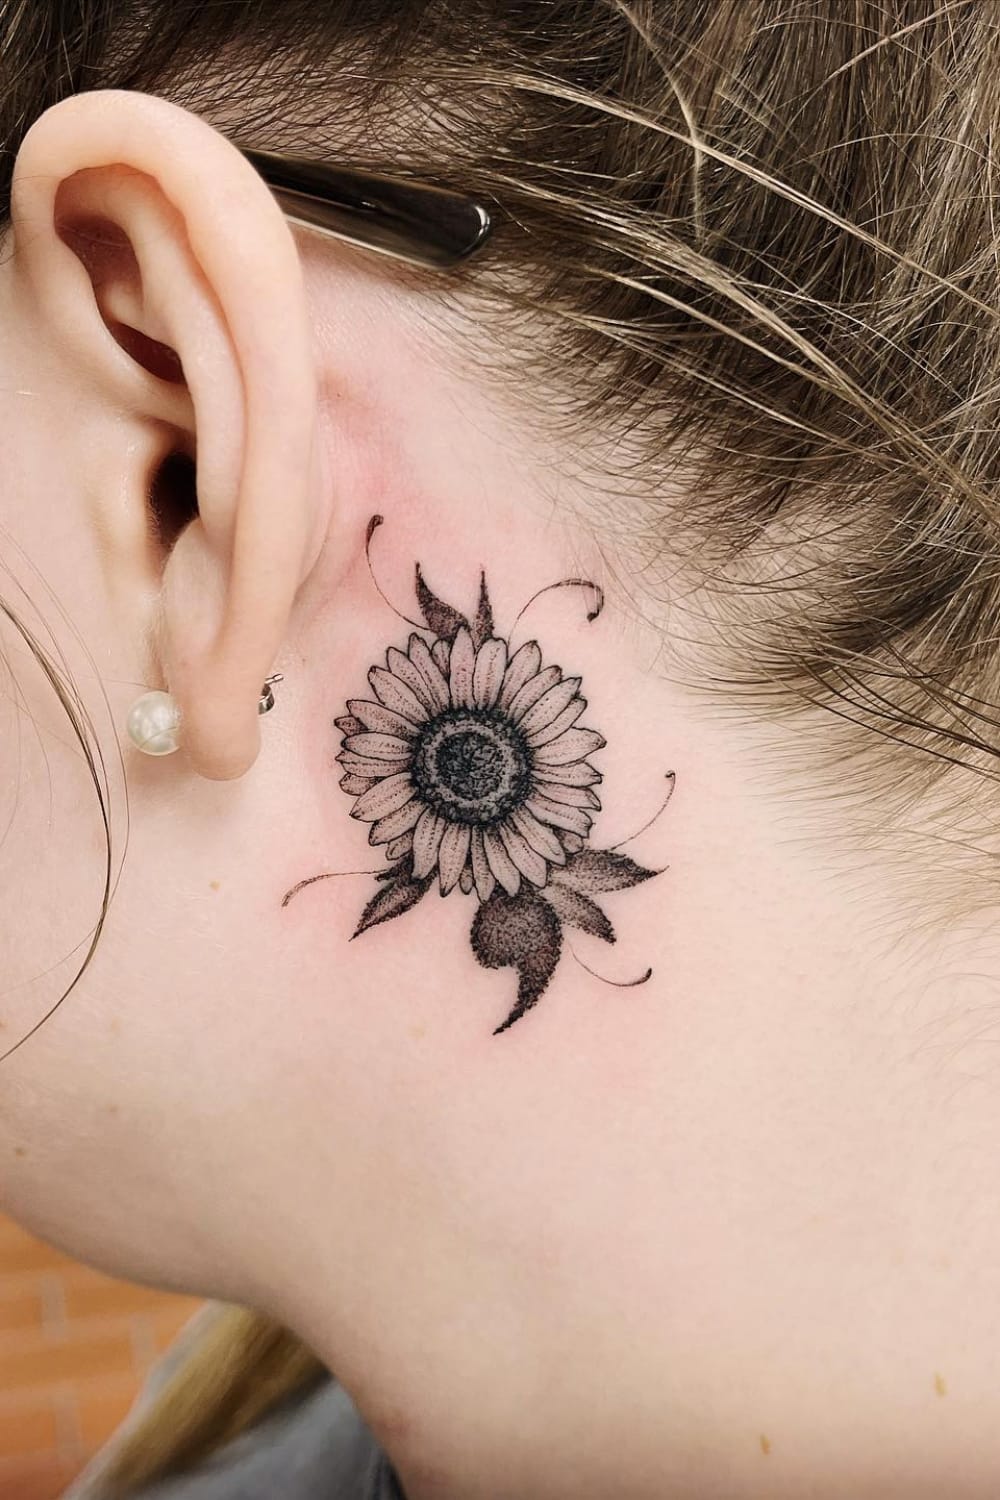 Small sunflower tattoo behind ear